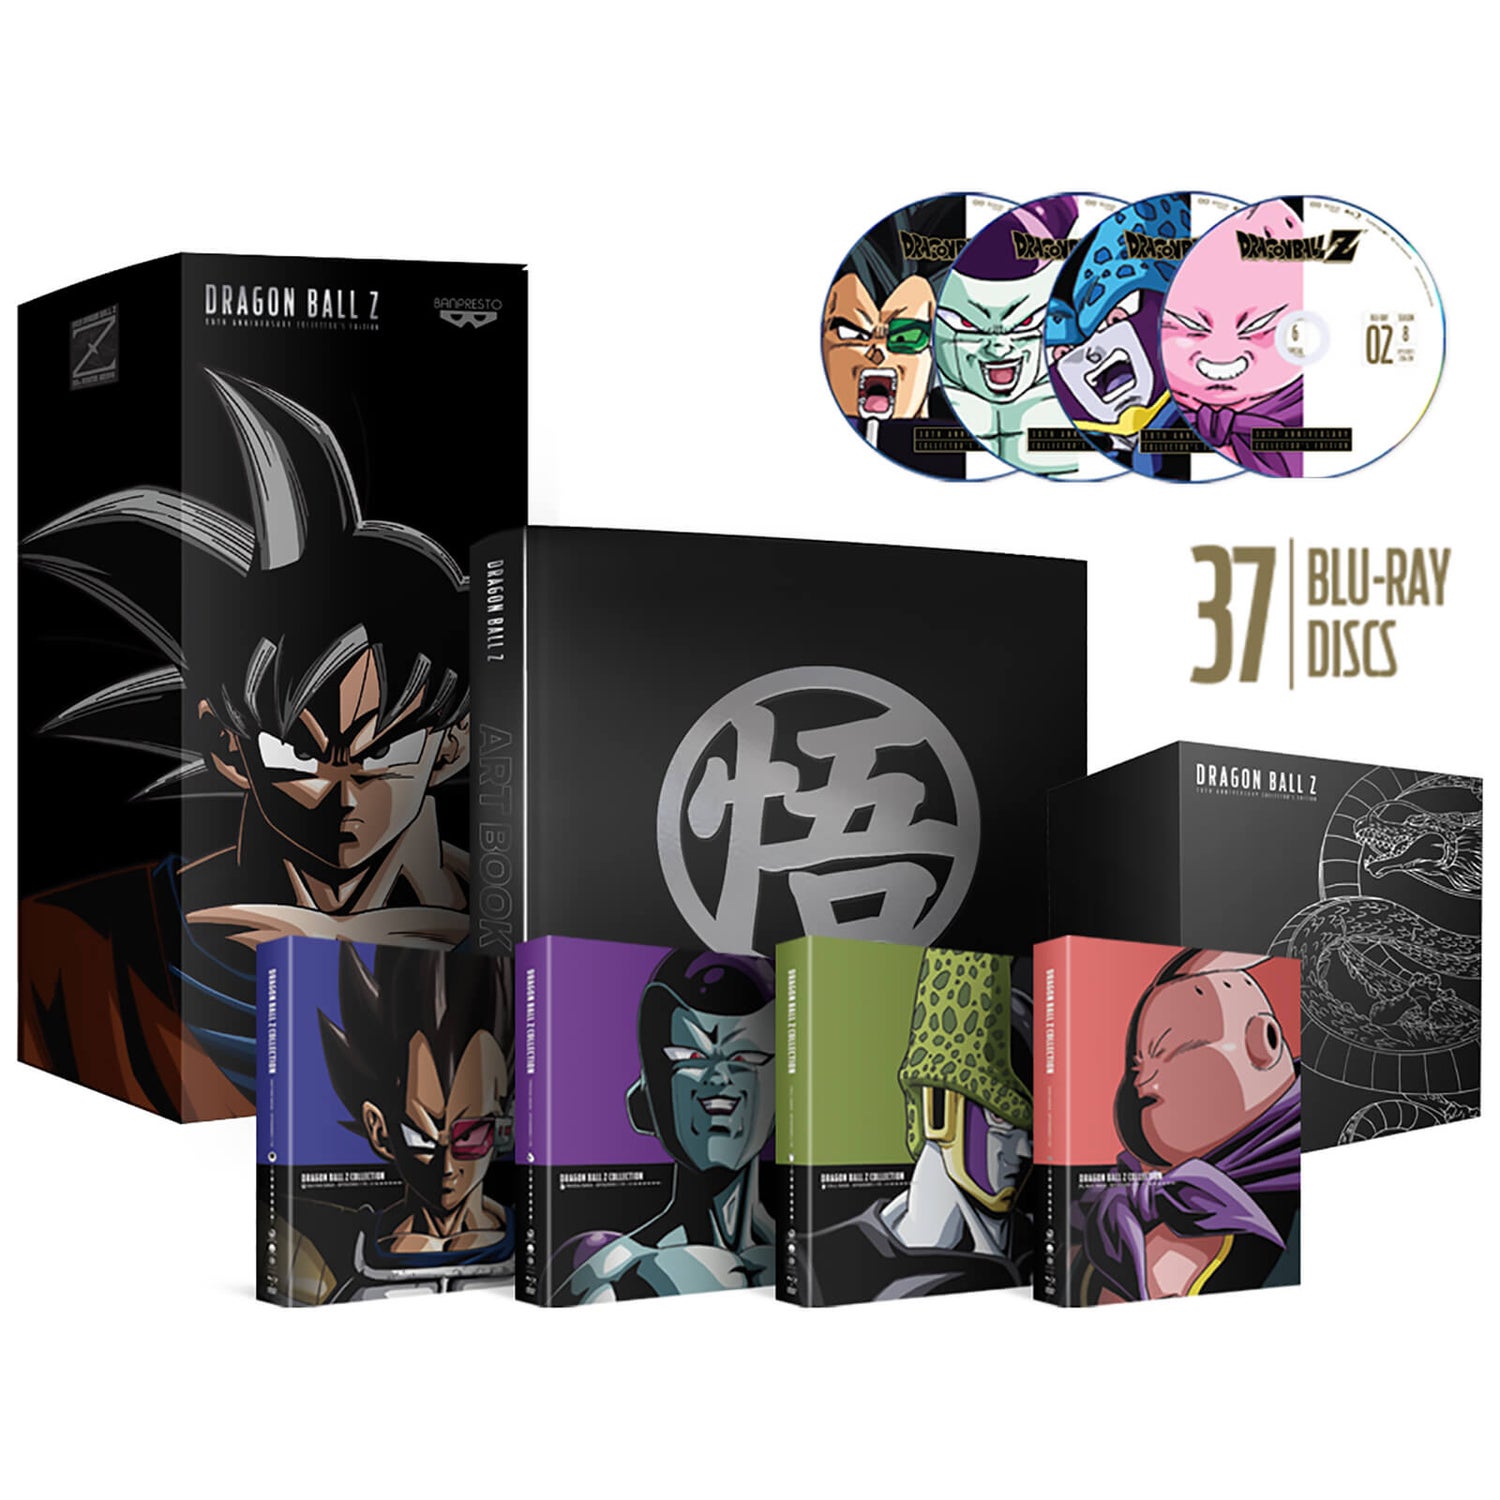 Dragon Ball Z 30th Anniversary Limited Edition Complete Series Blu-ray Boxset (+ Ban Presto Goku)